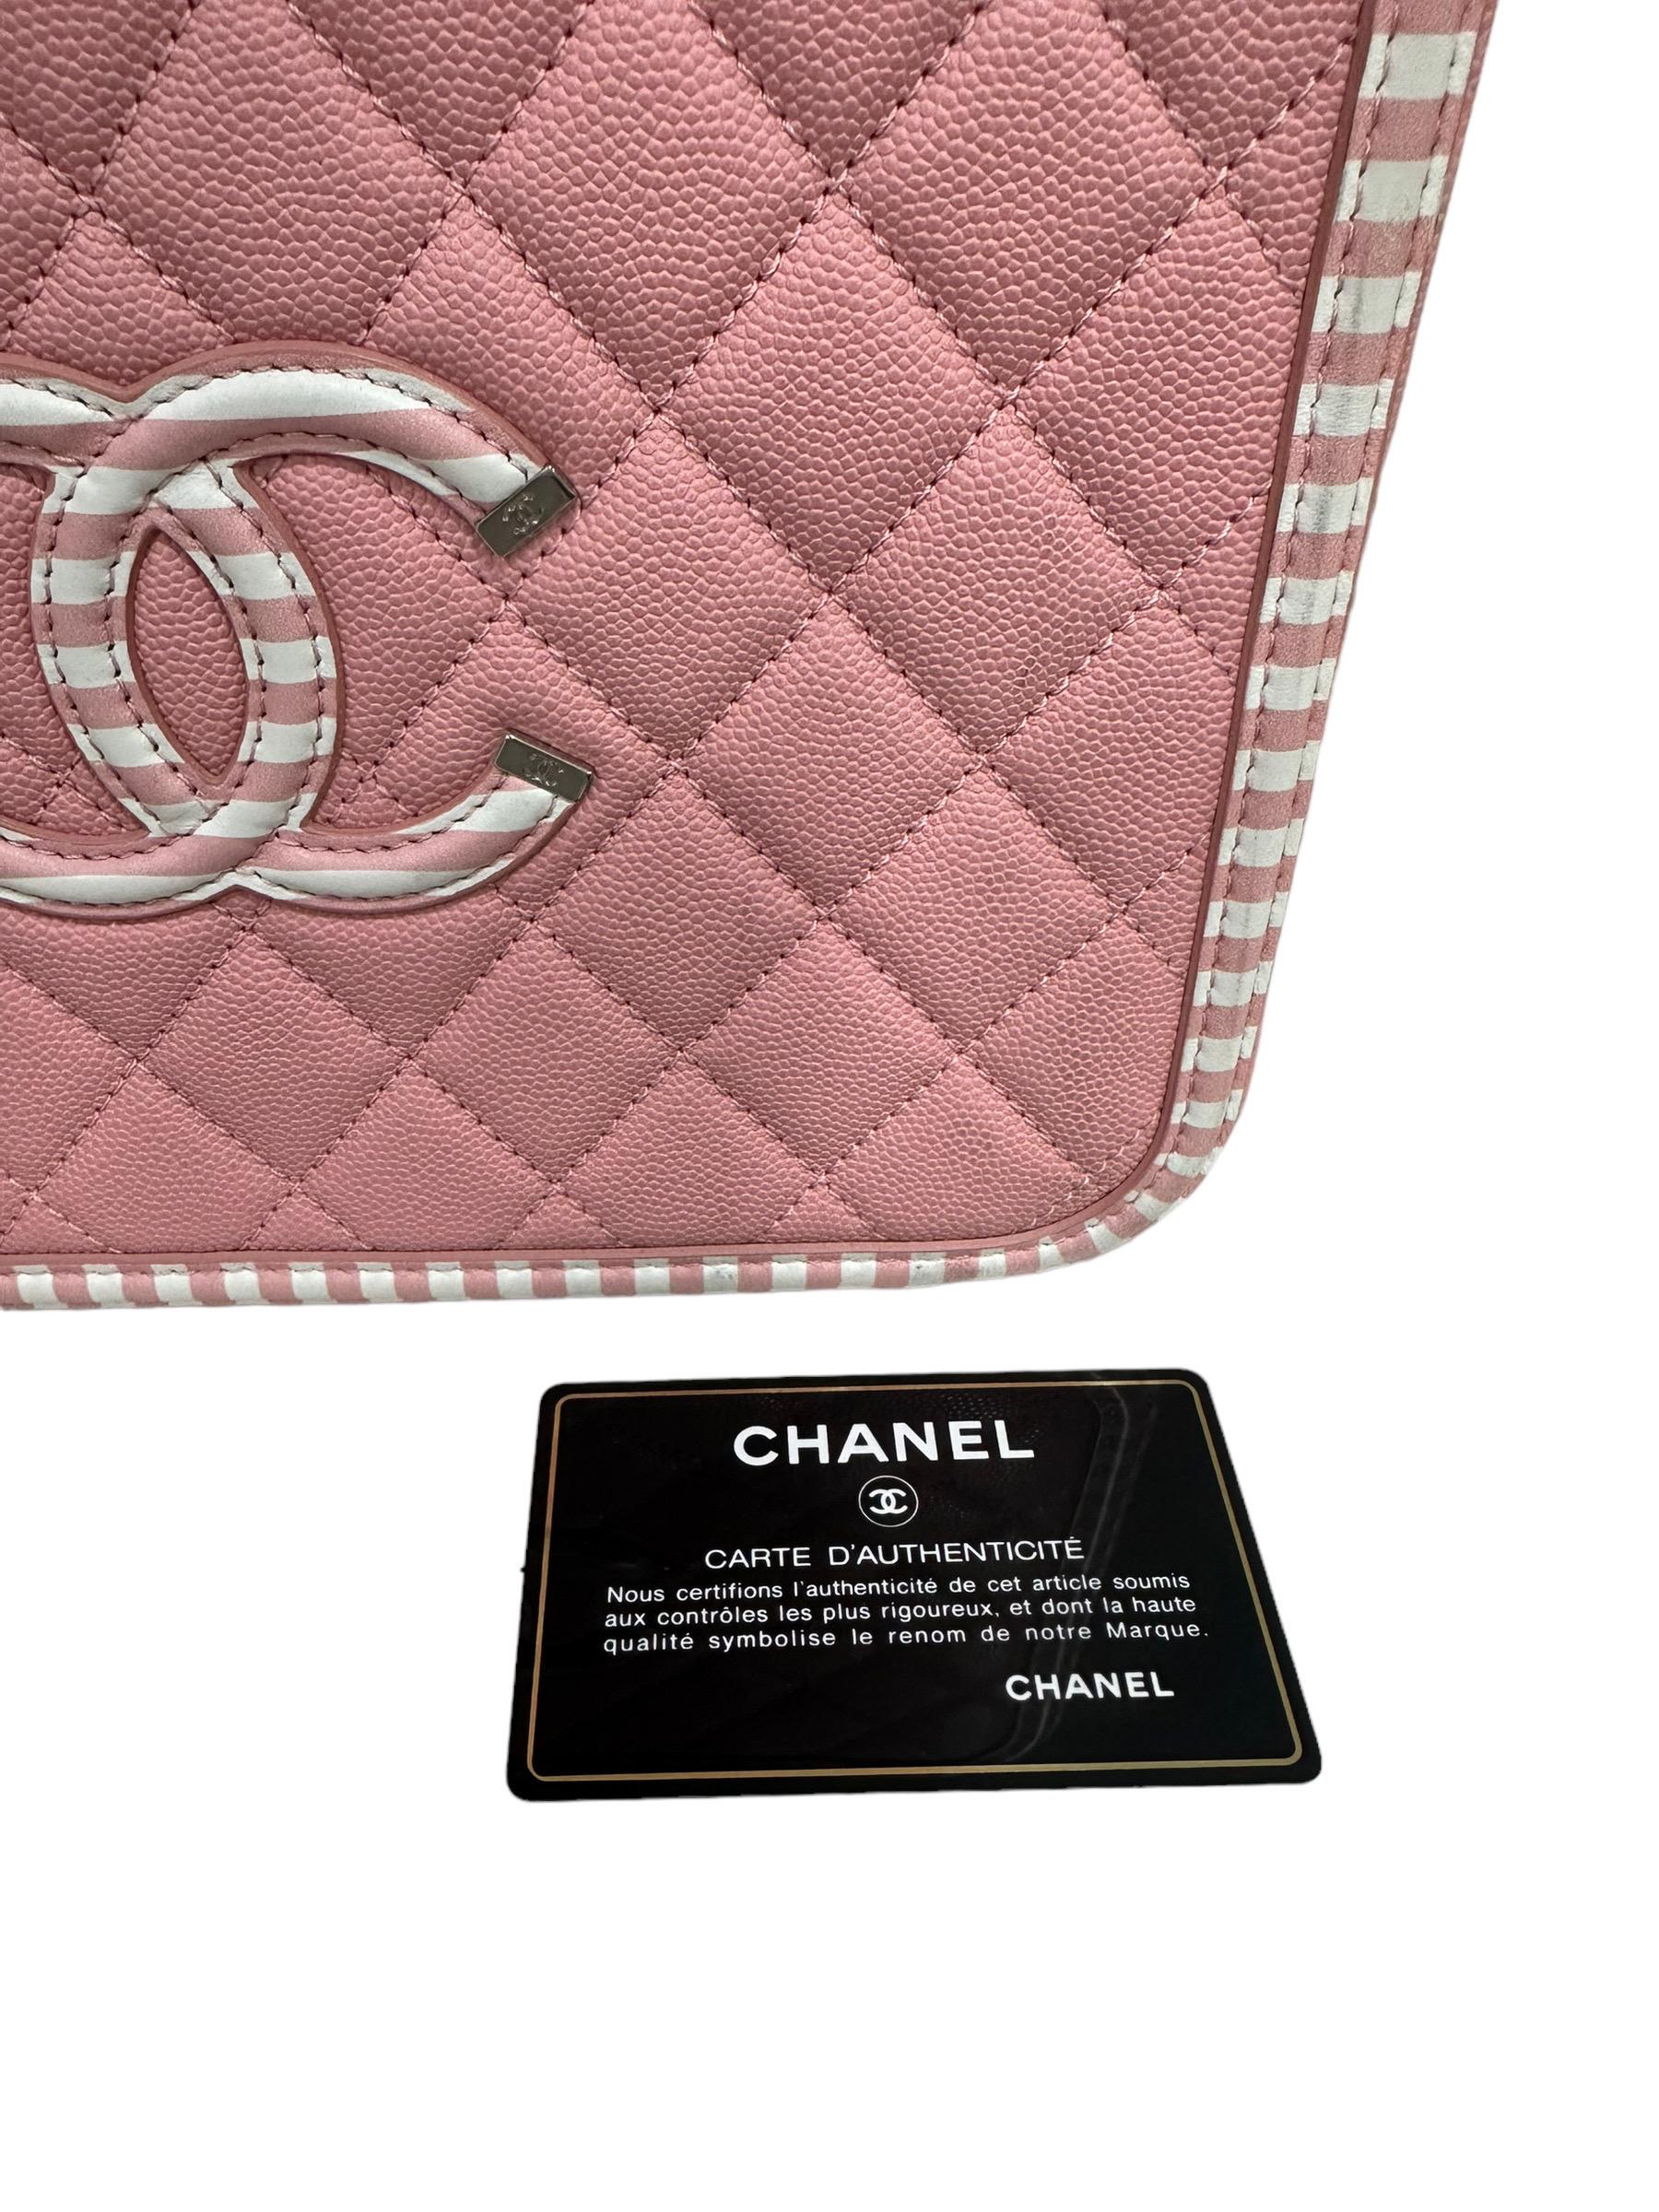 Beauty Case Chanel Vanity Rosa 2019 16